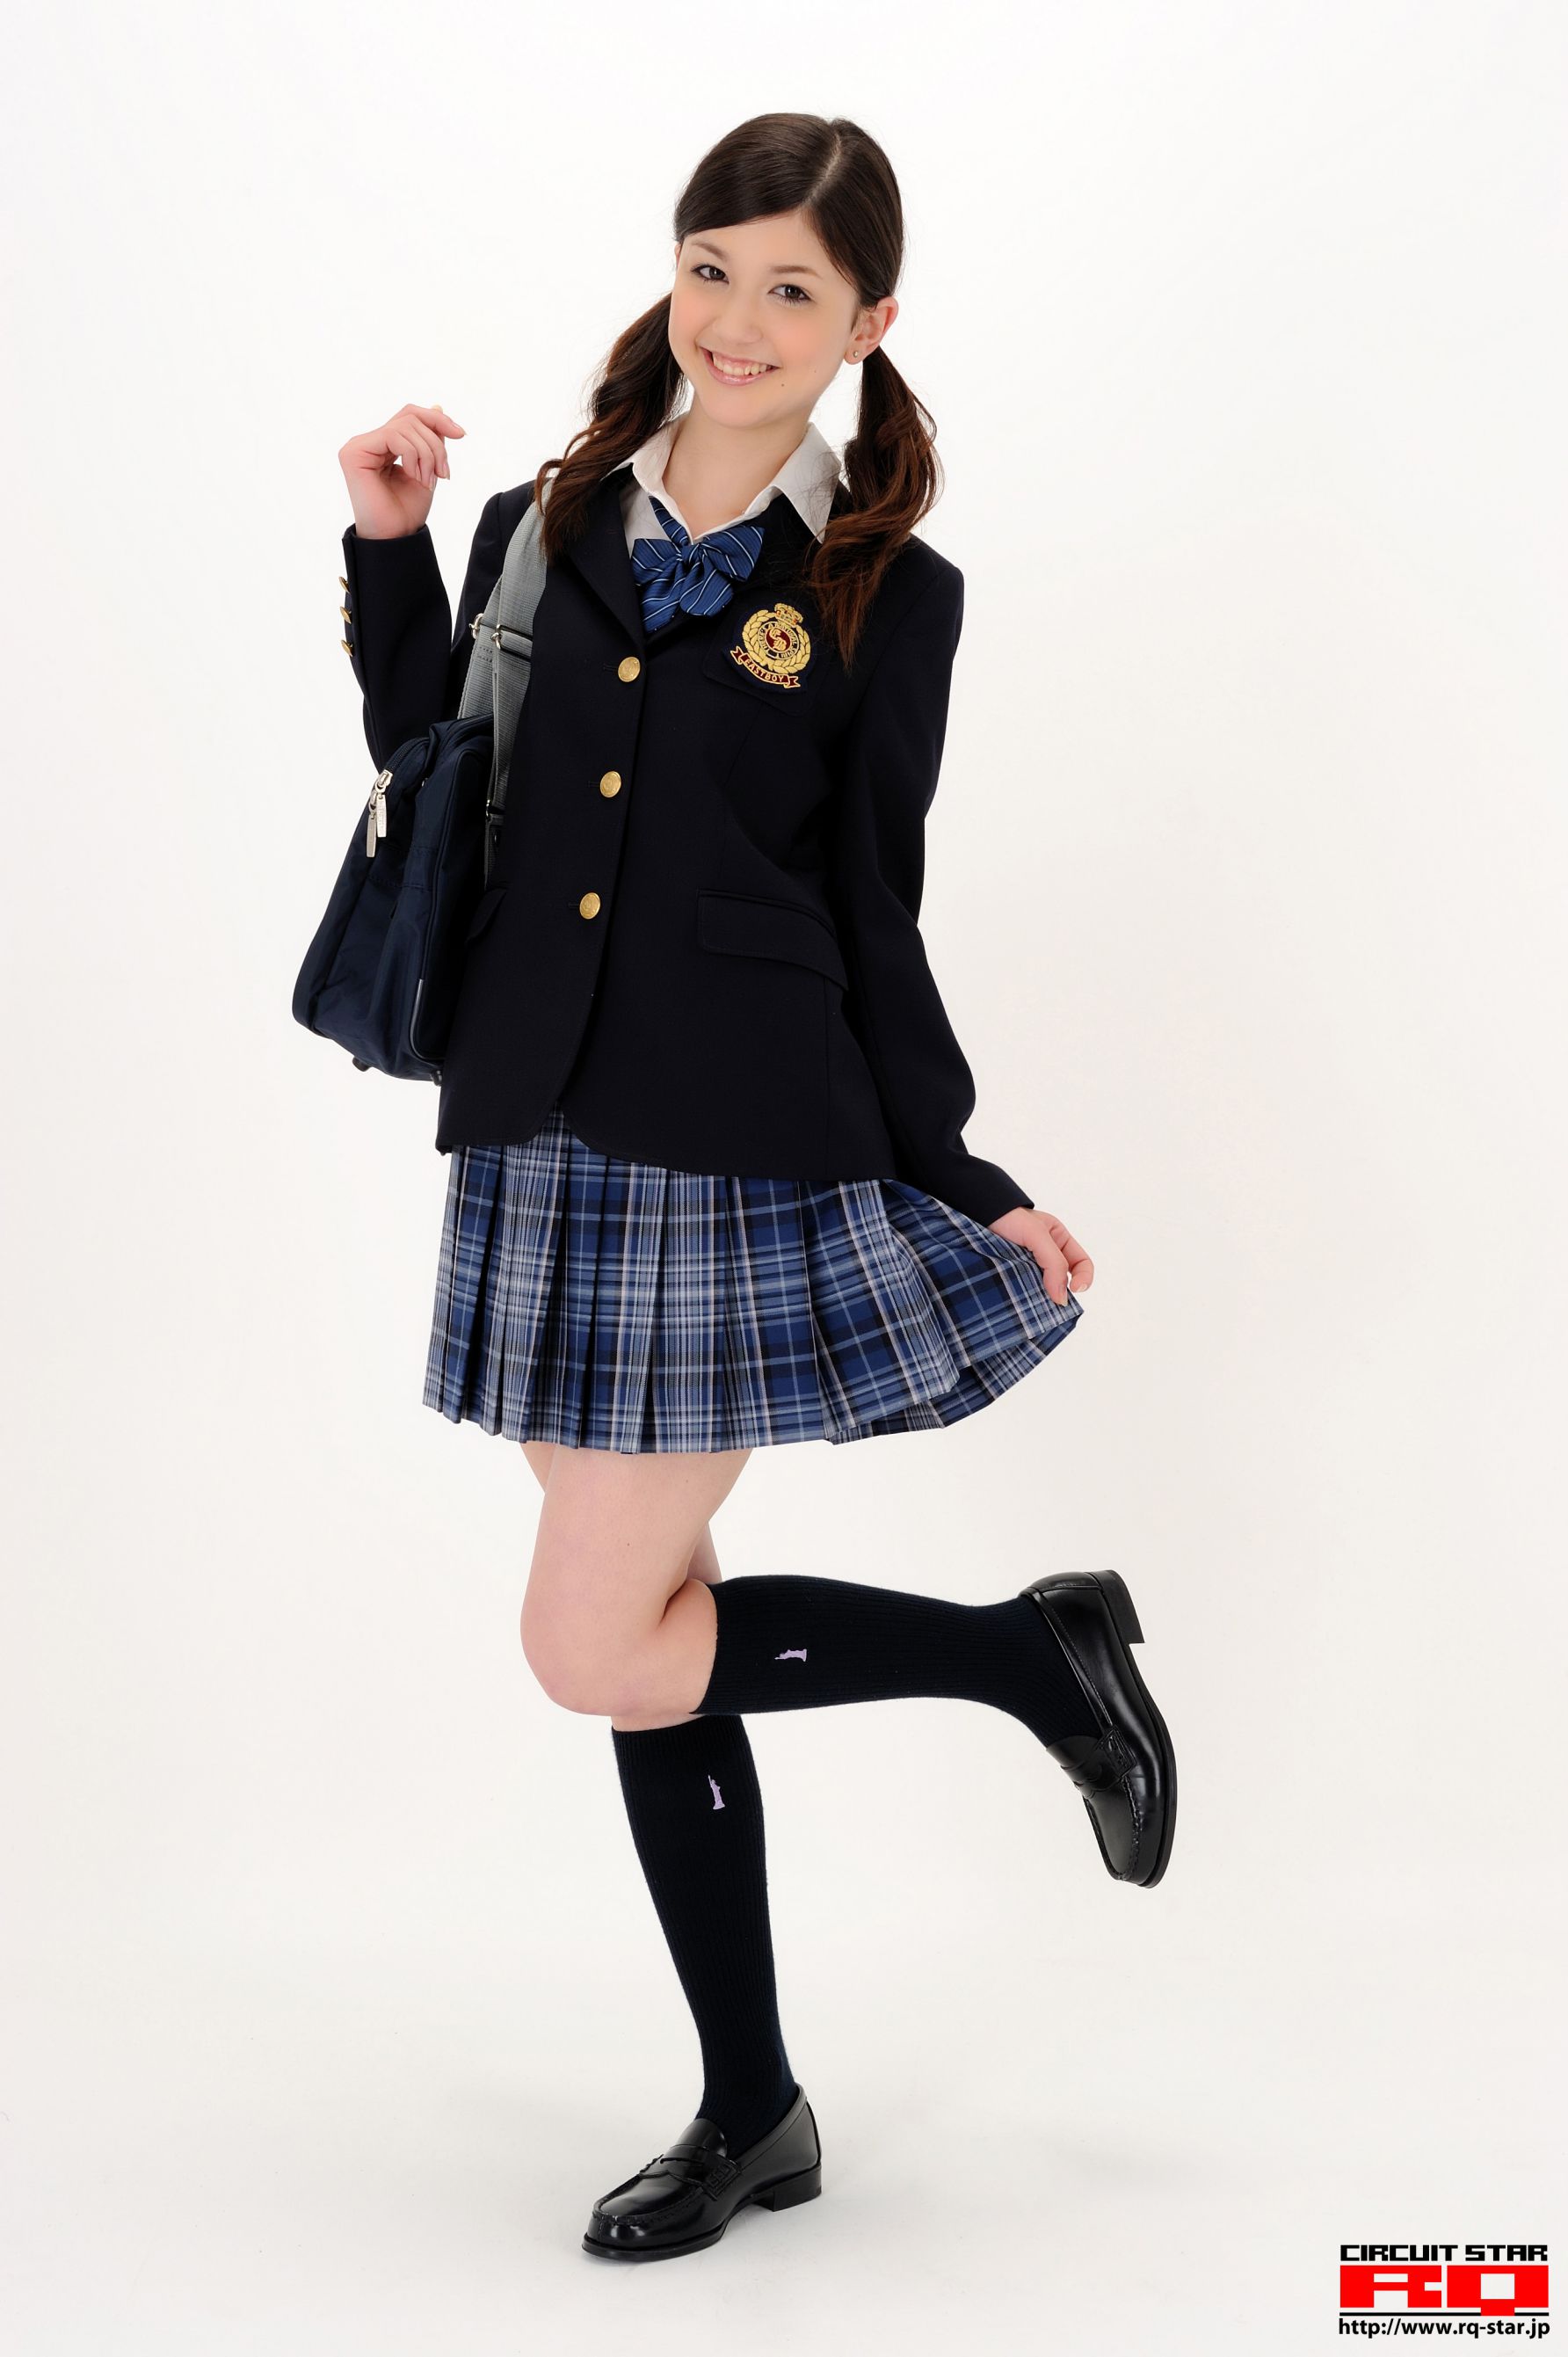 [RQ-STAR] NO.00348 久保エイミー /久保艾米 Student Style 校服系列 写真集